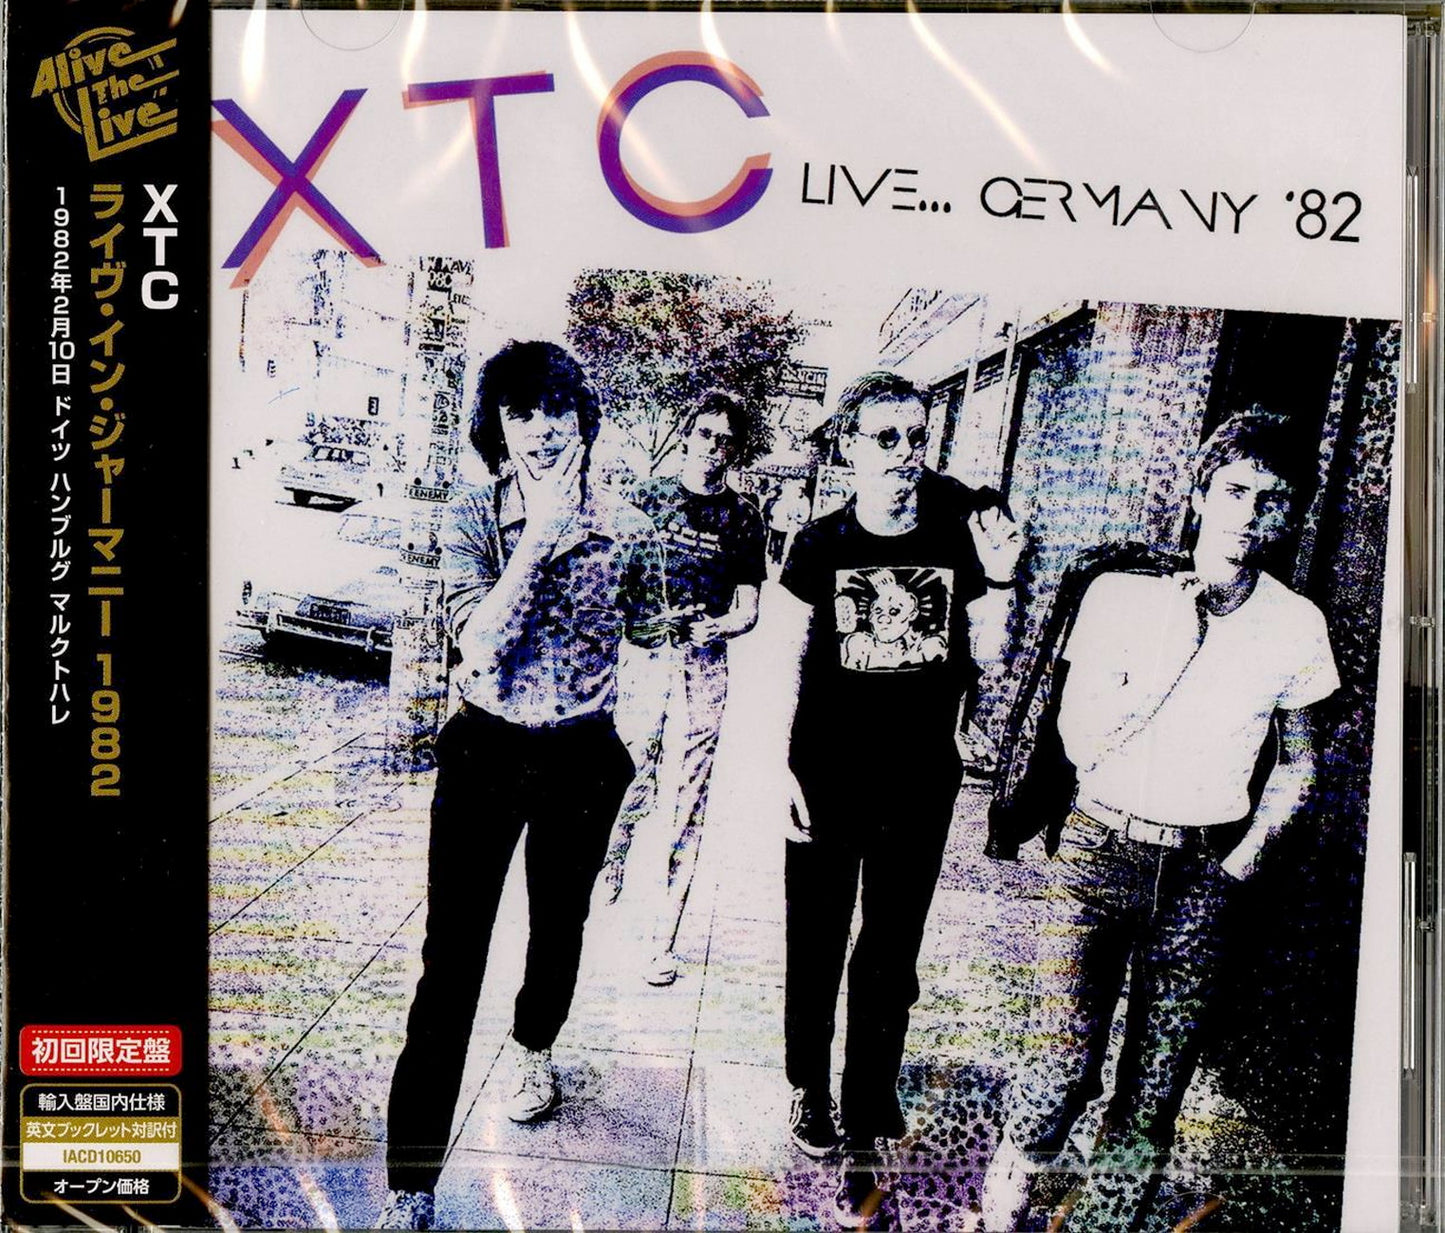 Xtc - Live... Germany '82 - Import CD